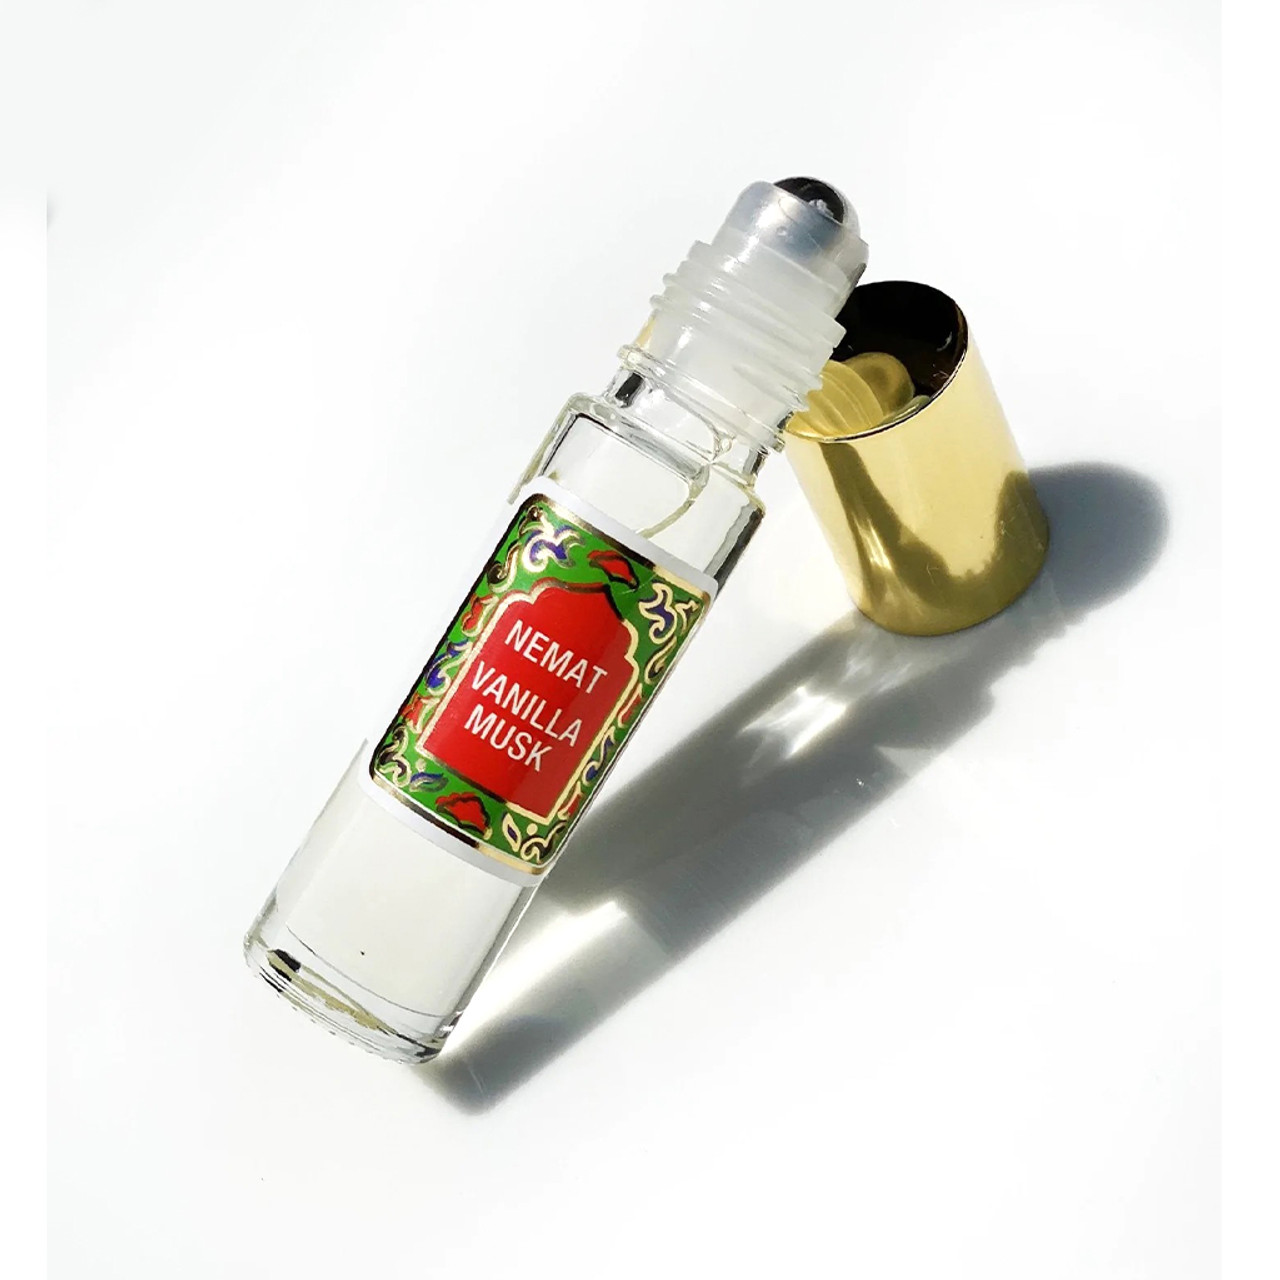  Vanilla Musk Perfume Oil, 0.3 Oz Portable Roll-On